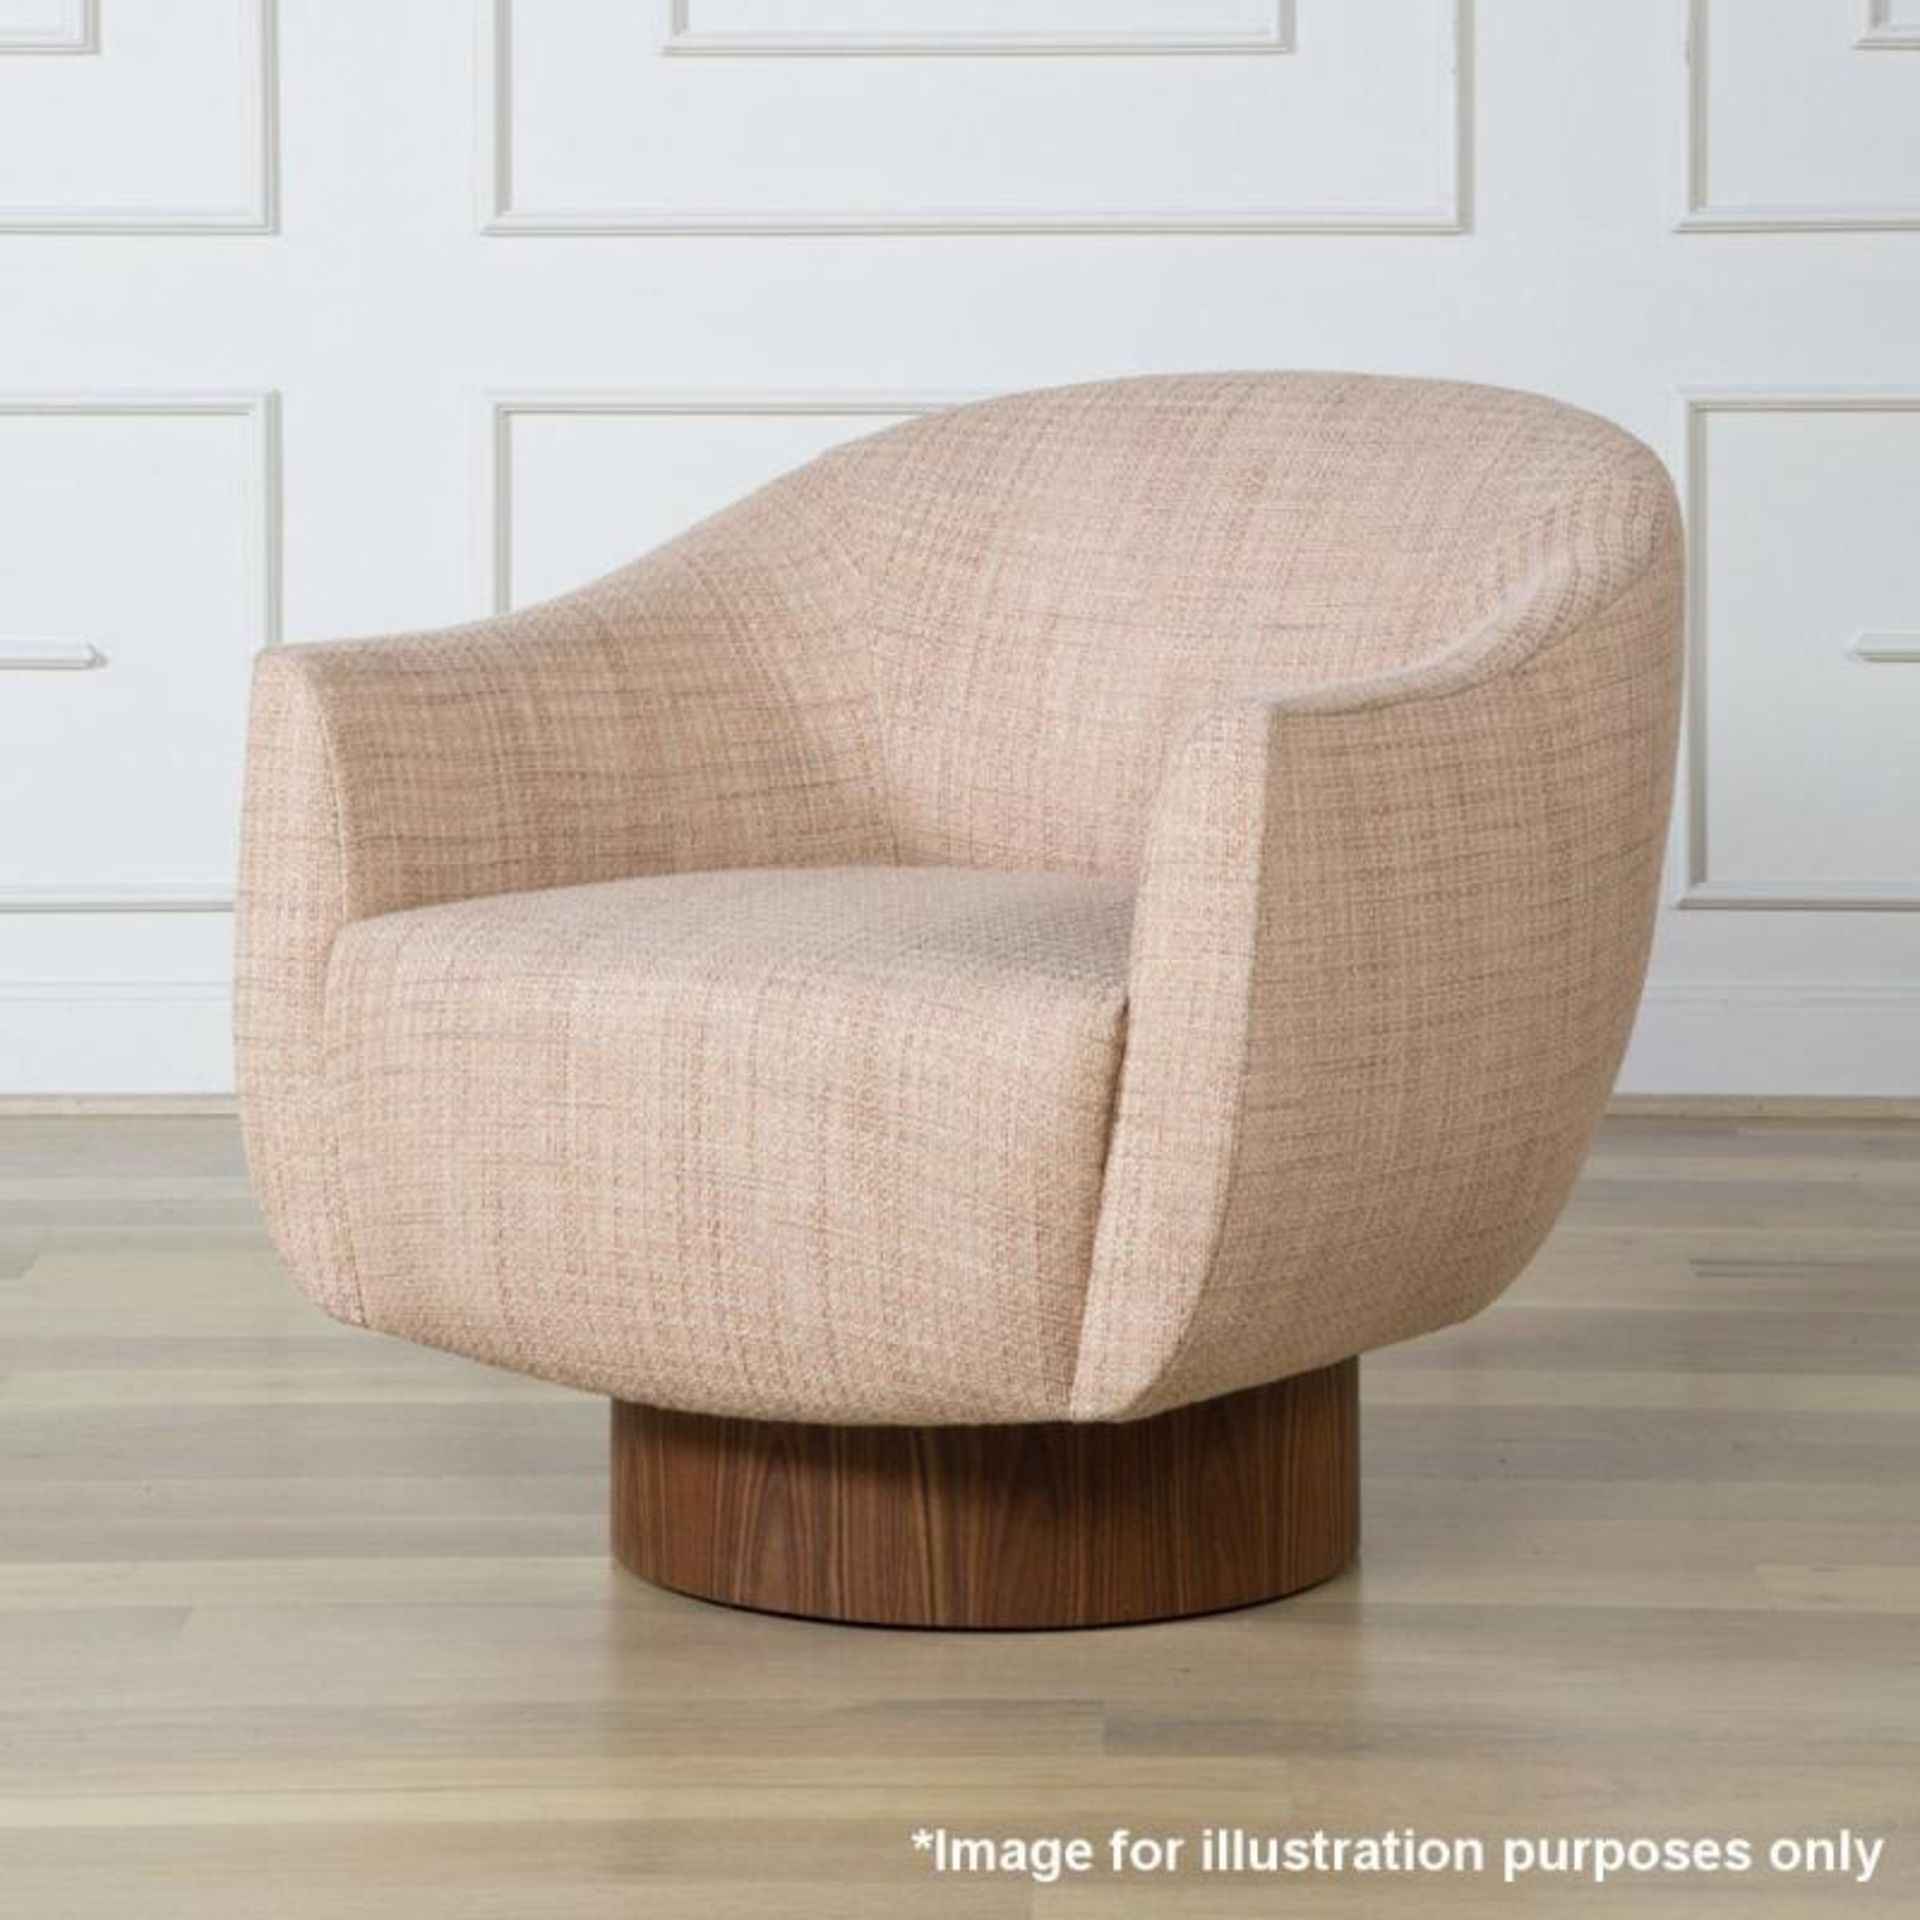 1 x KELLY WEARSTLER Sonara Swivel Chair Rosewood - Dimensions: 31” W x 35” D x 31” H - Ex-Display In - Image 6 of 28